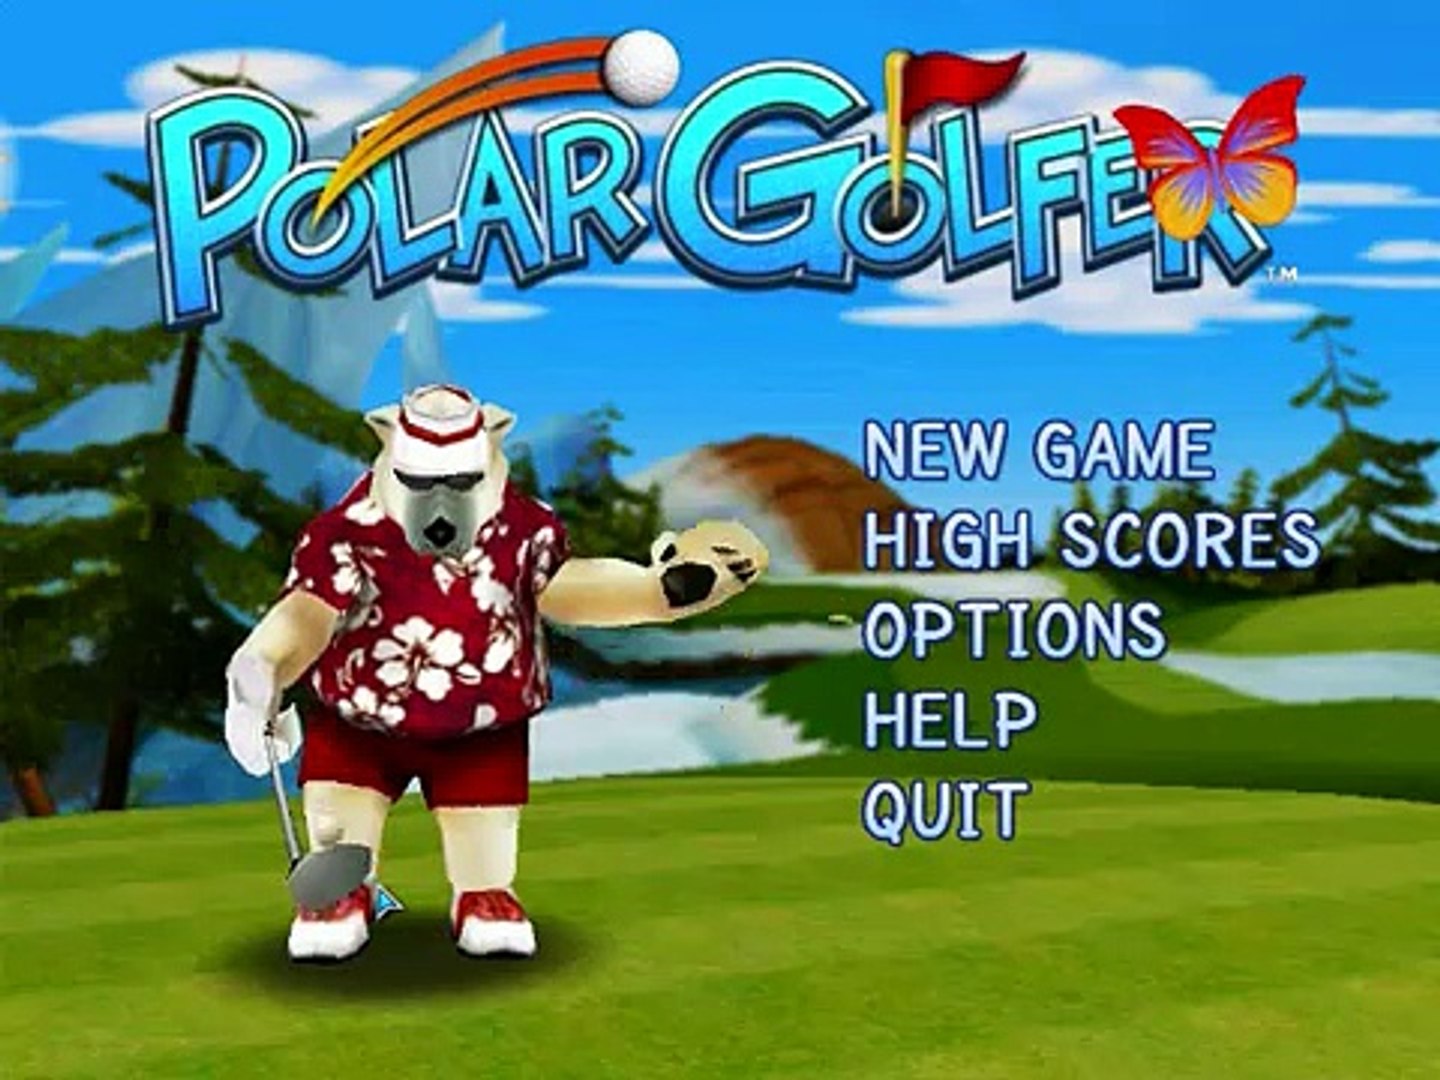 Polar Golfer: Gameplay - video Dailymotion